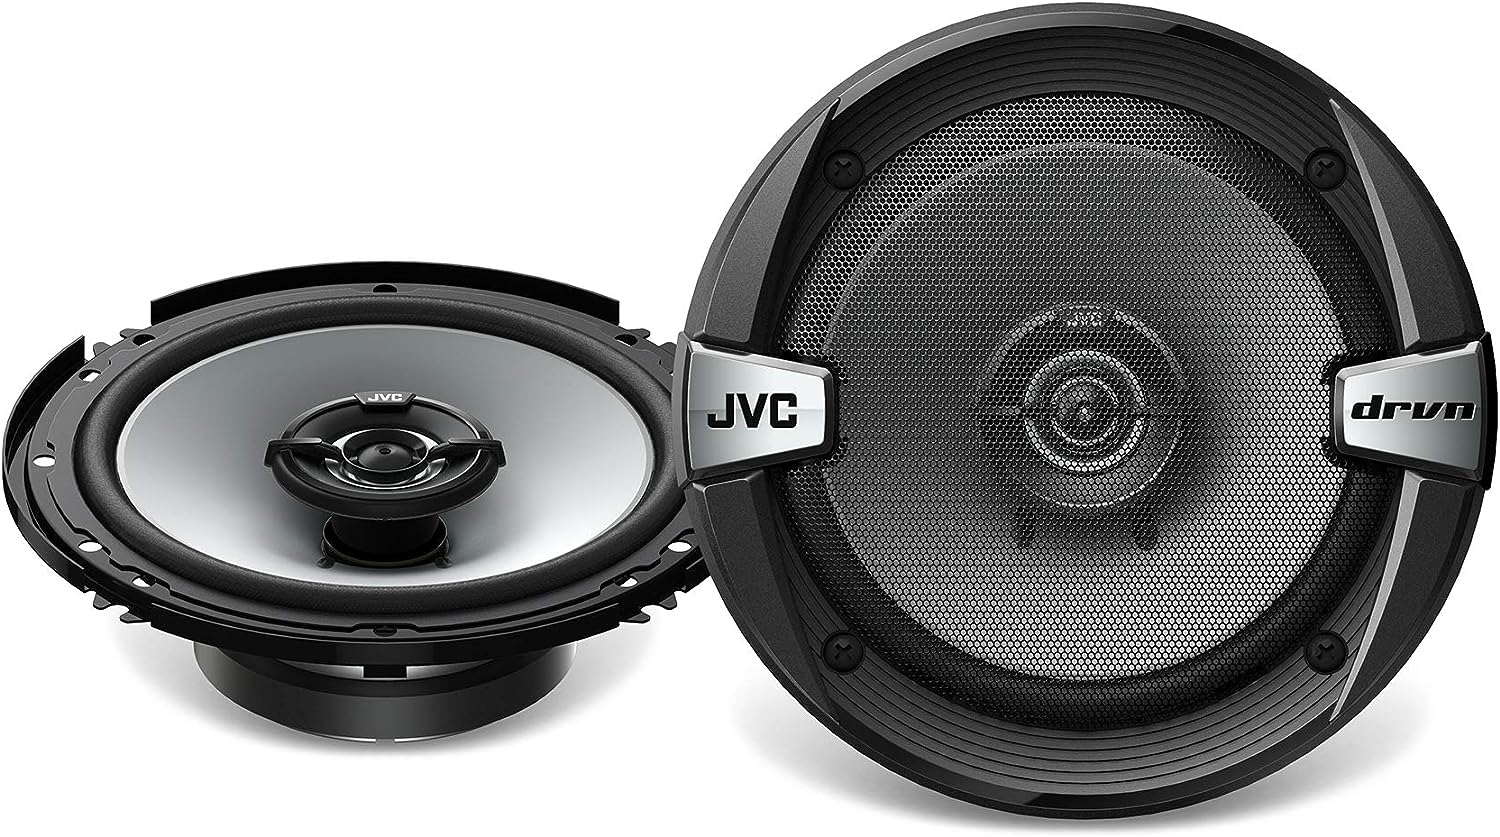 Jvc CS-DR162 600W Peak (100W RMS) 6.5" DRVN Series 2-Way Coaxial Car Speakers